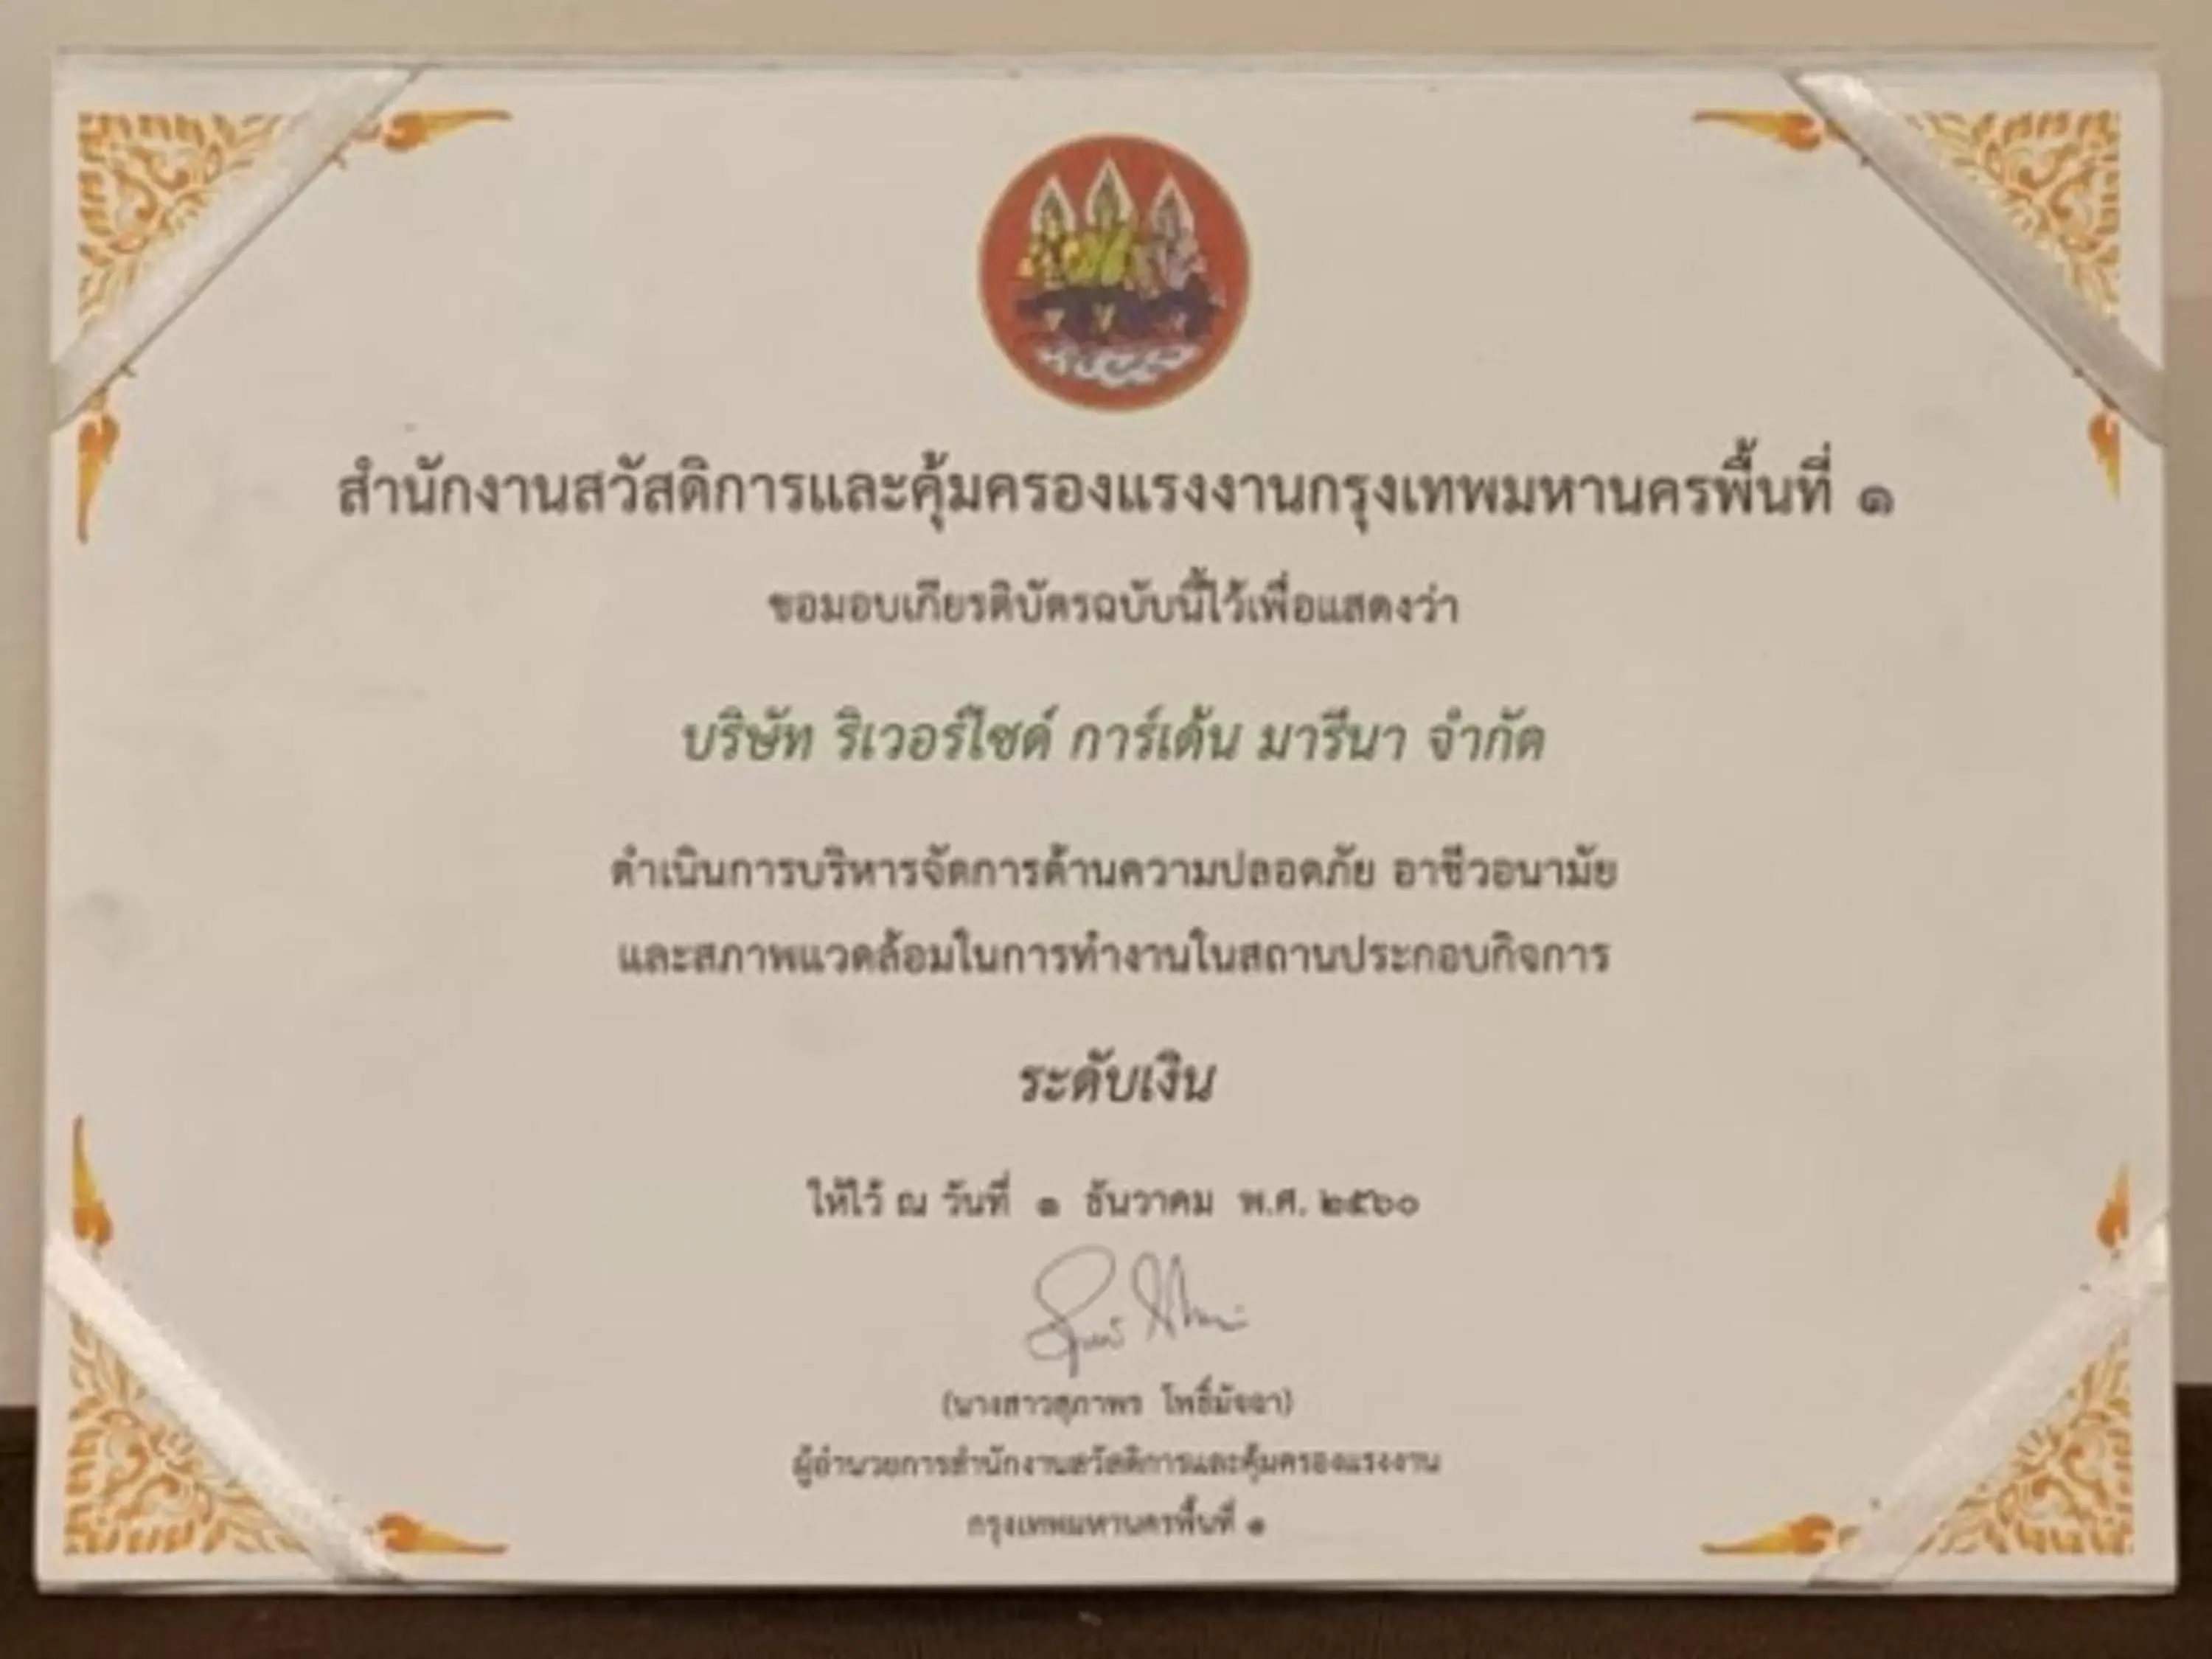 Certificate/Award in Chatrium Hotel Riverside Bangkok